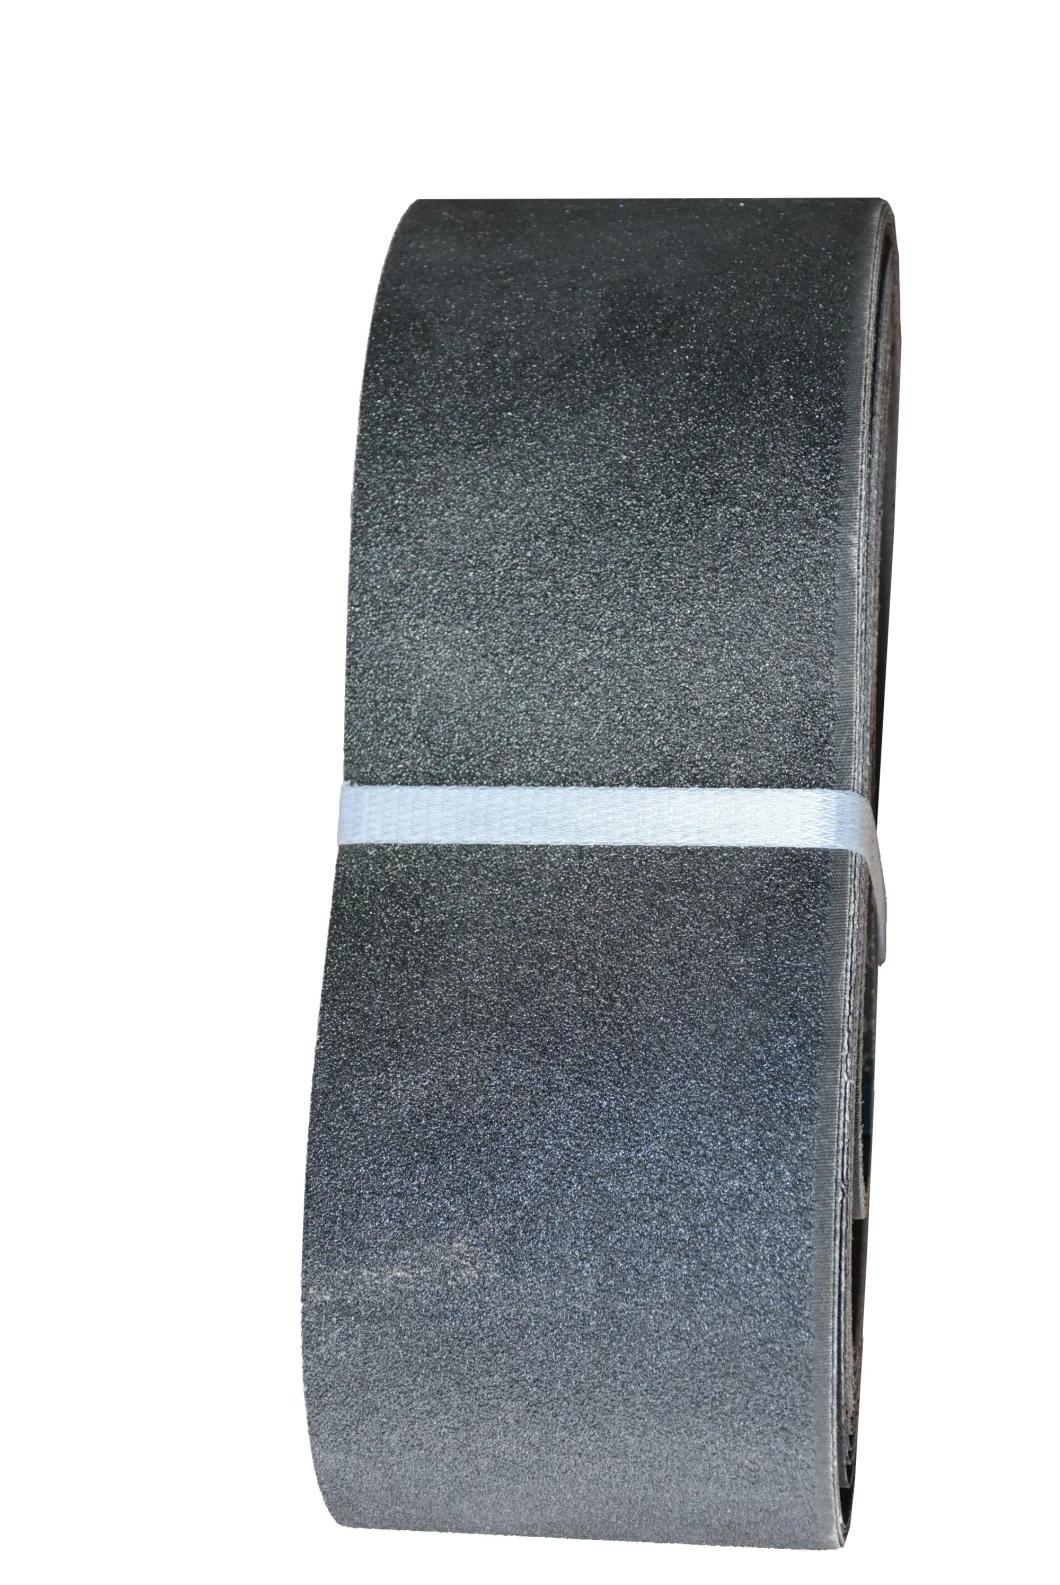 Silicon Carbide Sanding Purpose Abrasive Endless Belt for Abrasives Polishing